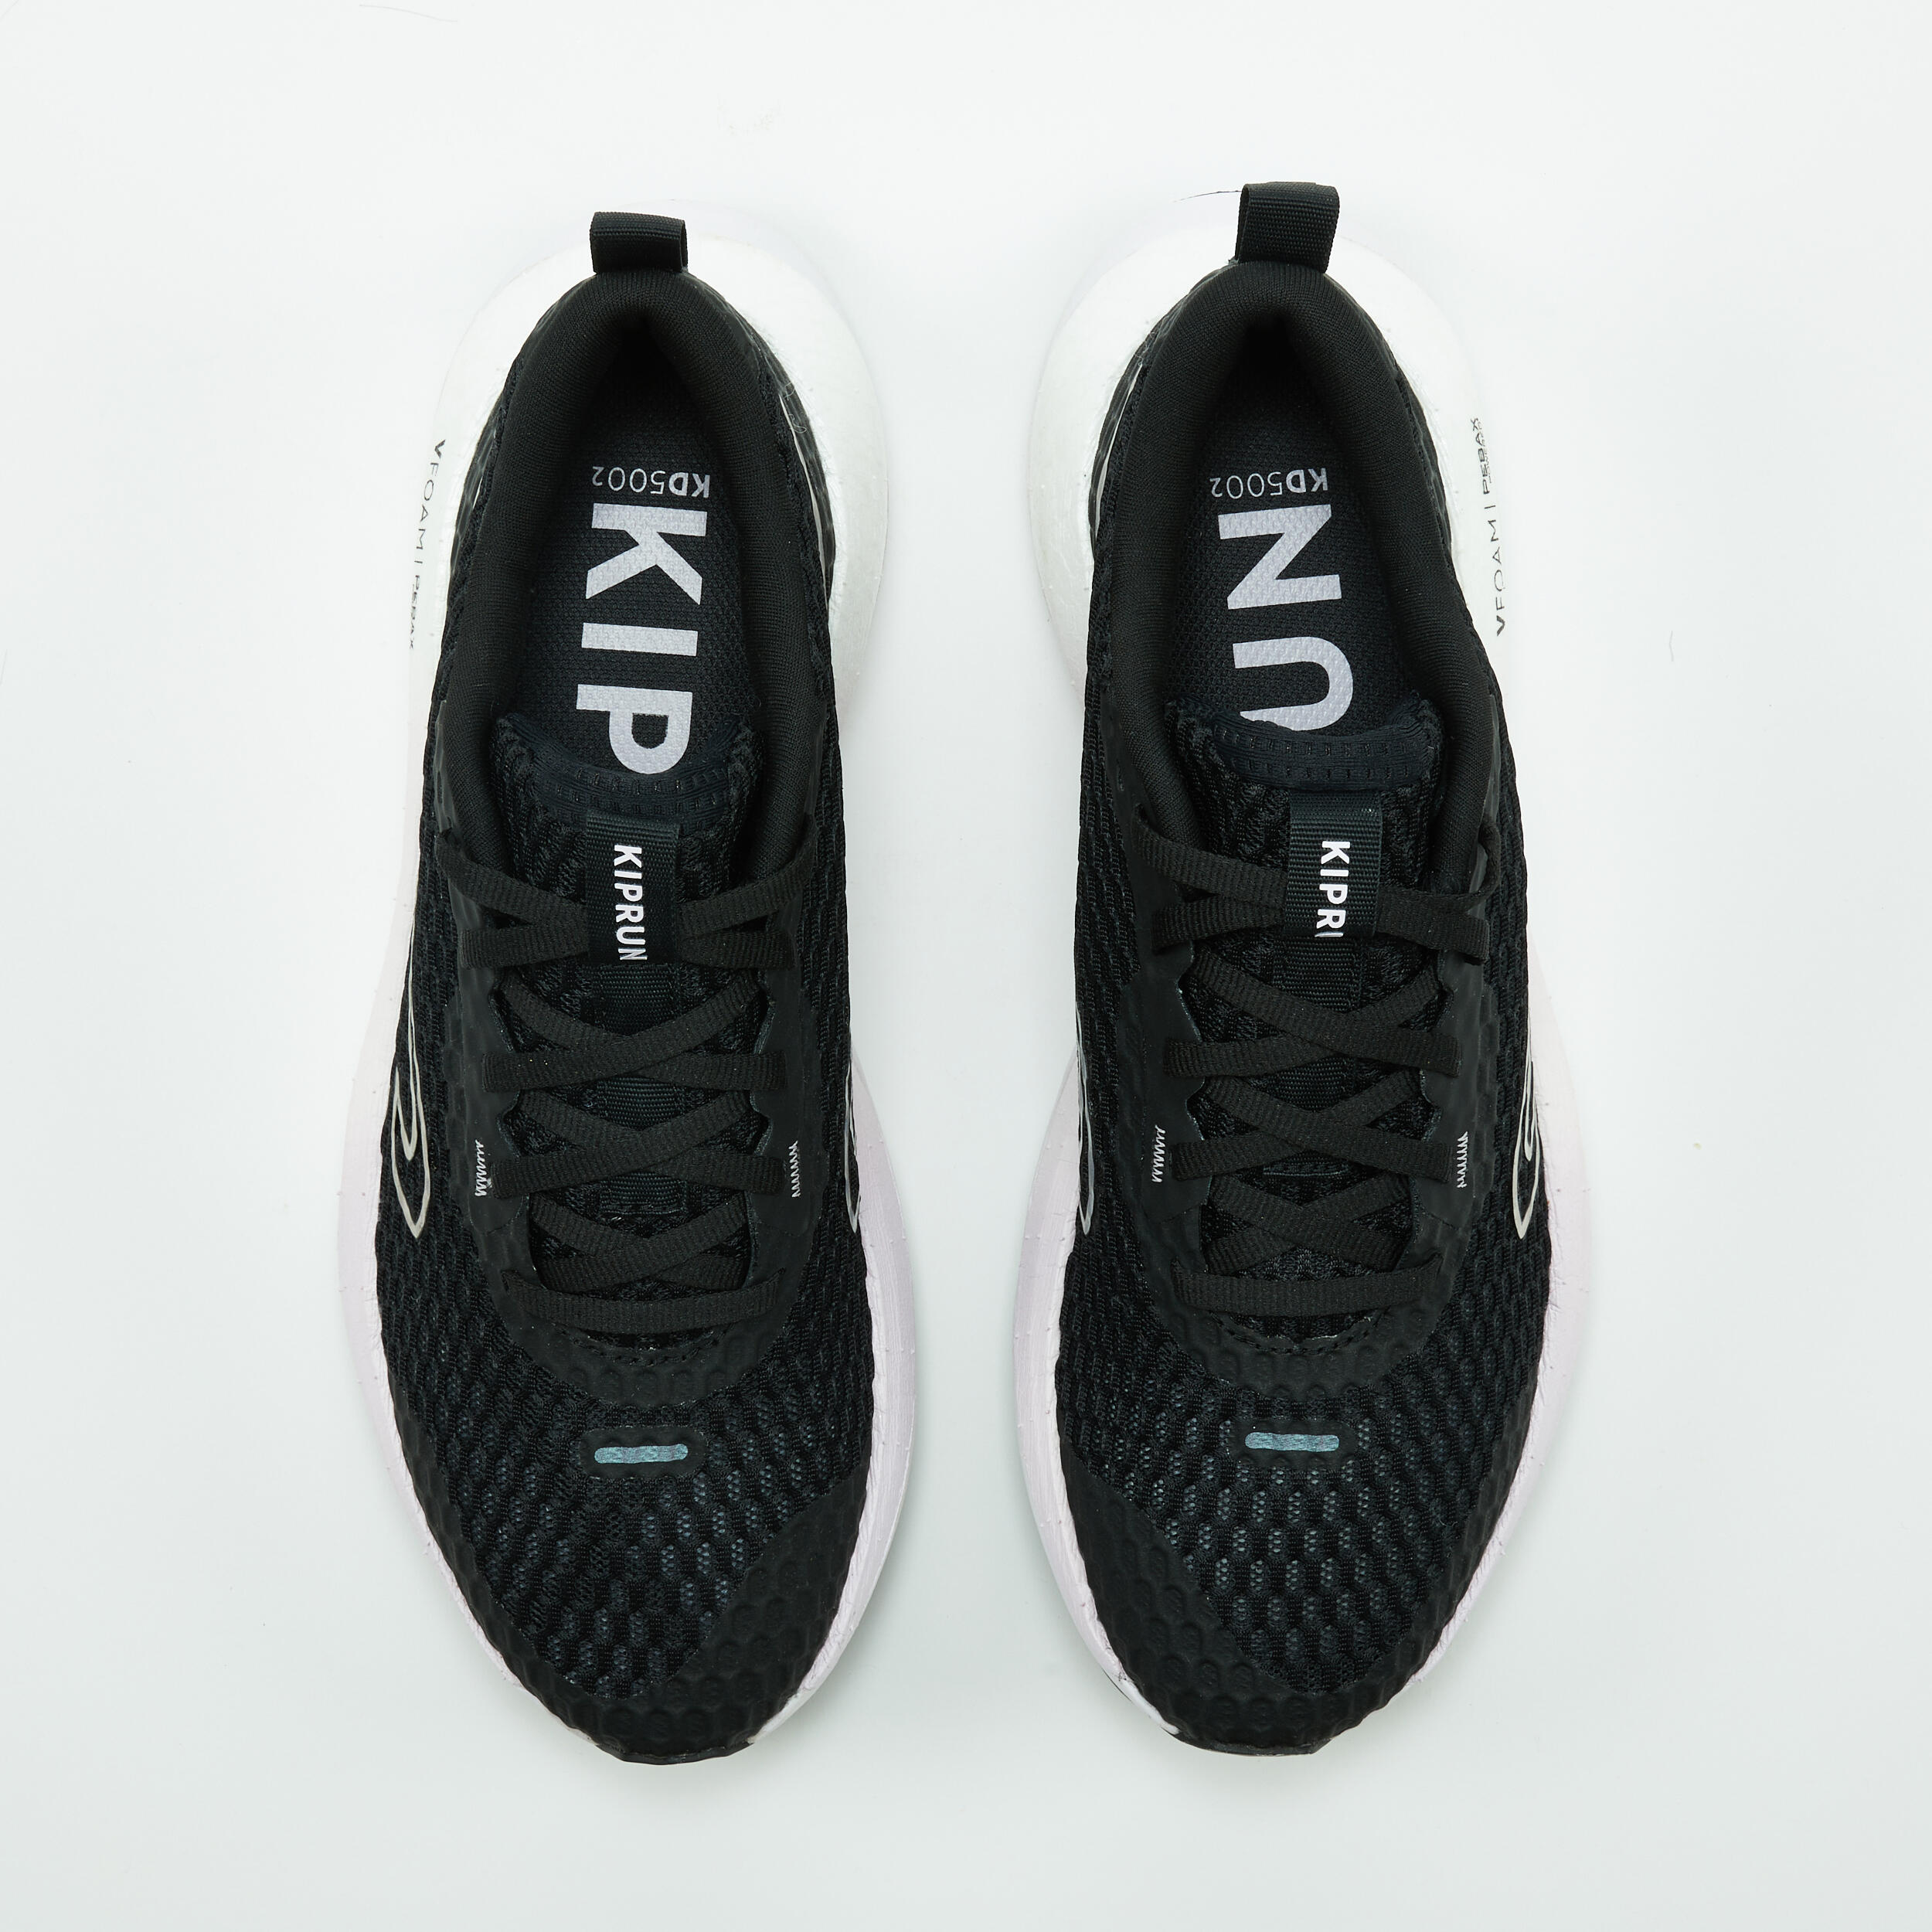 KD500 2 women's running shoes - black/mauve 7/8